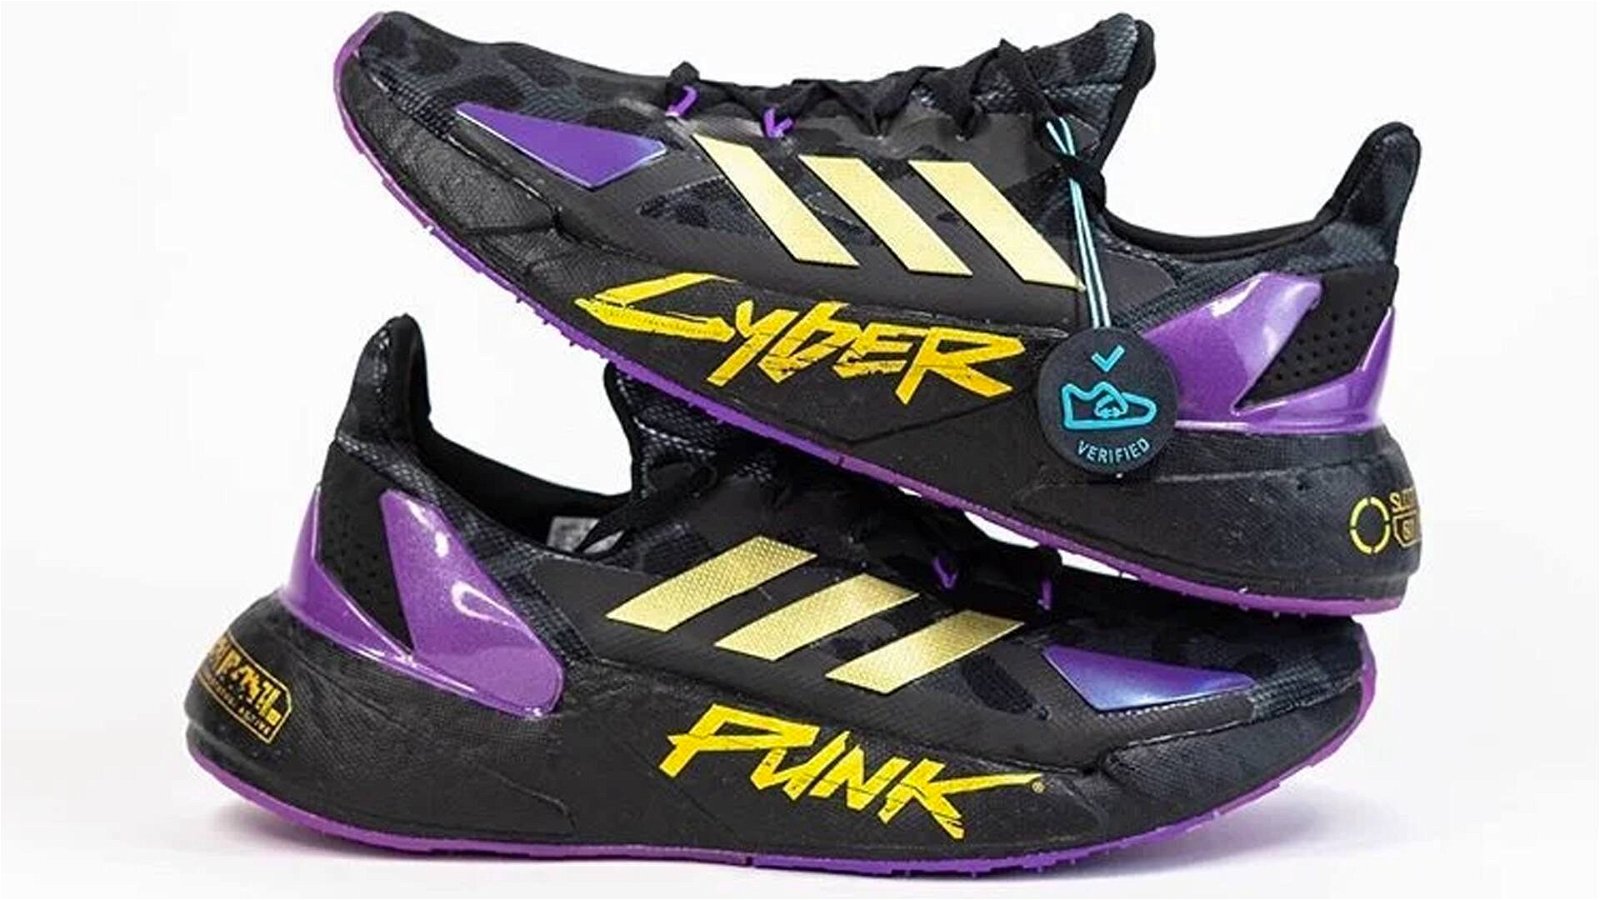 Immagine di Adidas X Cyberpunk 2077: ecco le scarpe di Night City